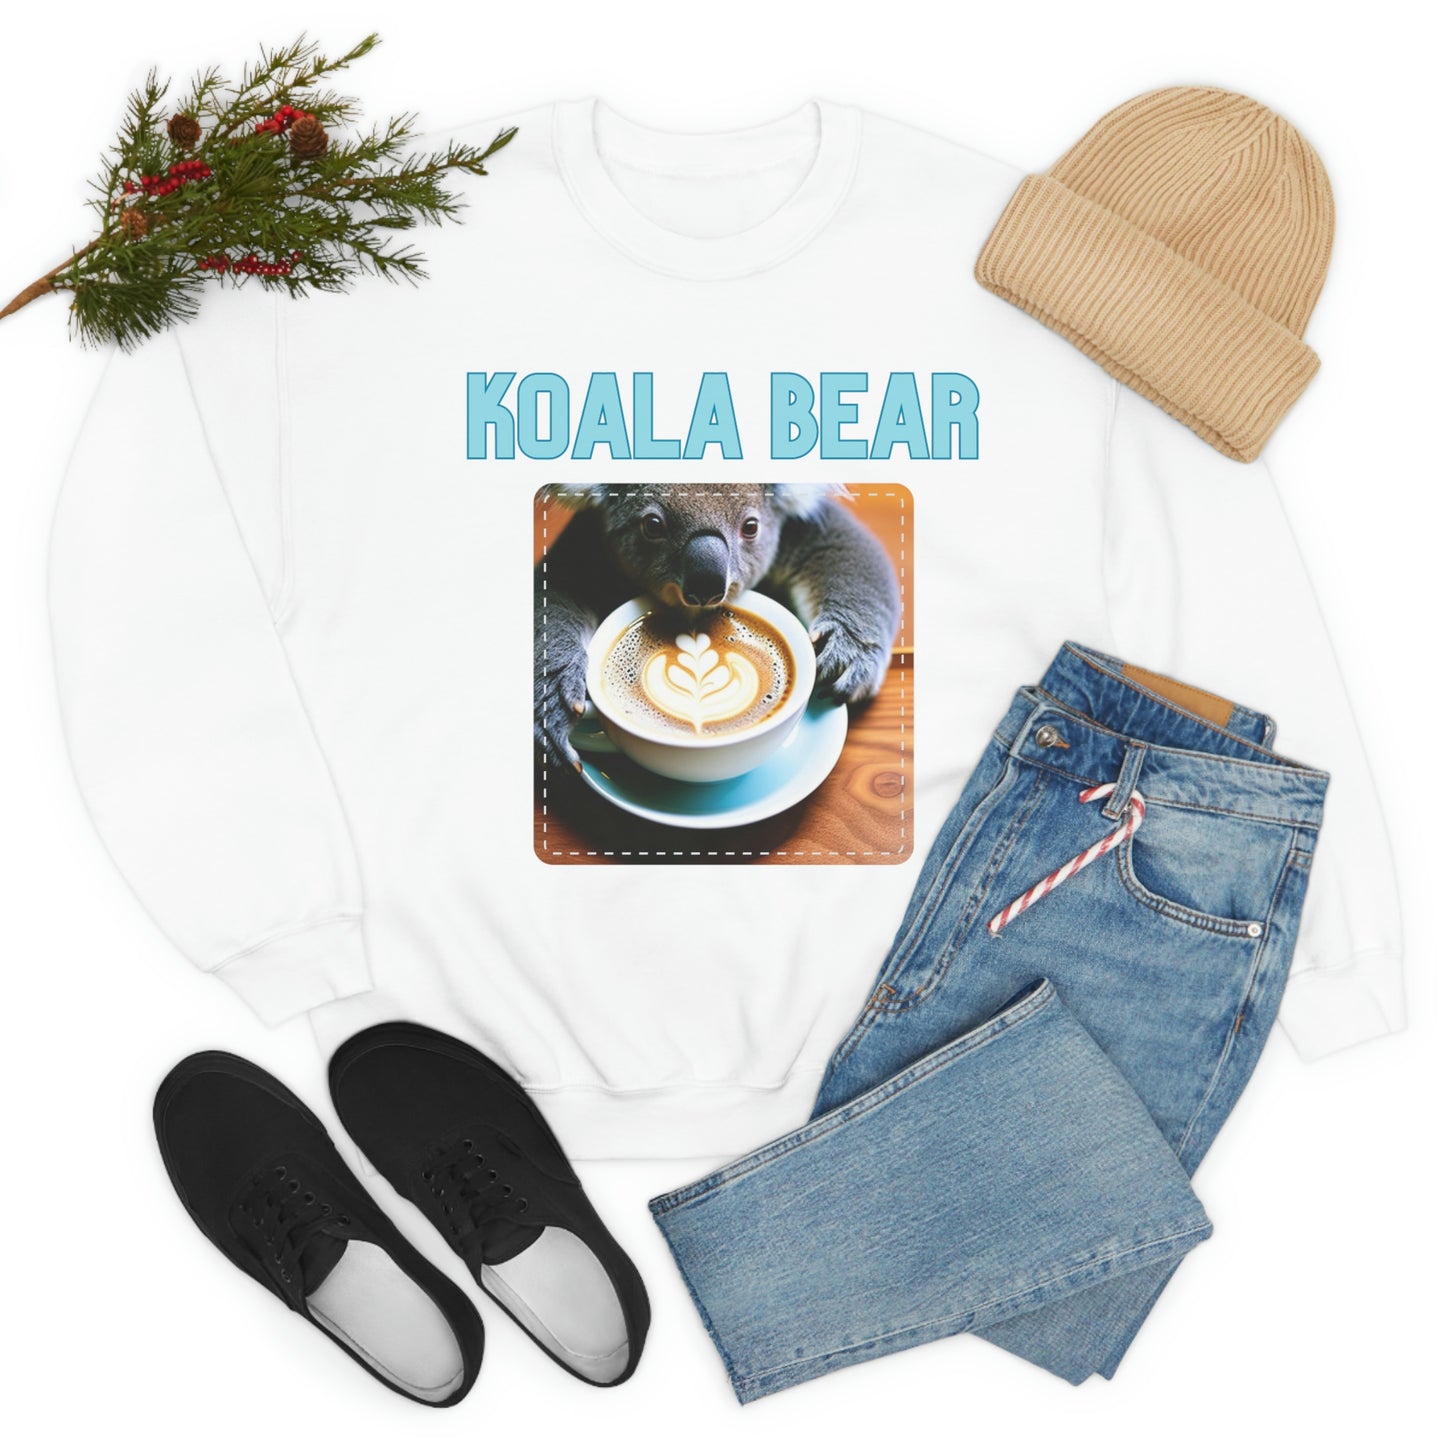 Koala Bear with Latte Art Latte/Coffee Graphic Crewneck Sweatshirt